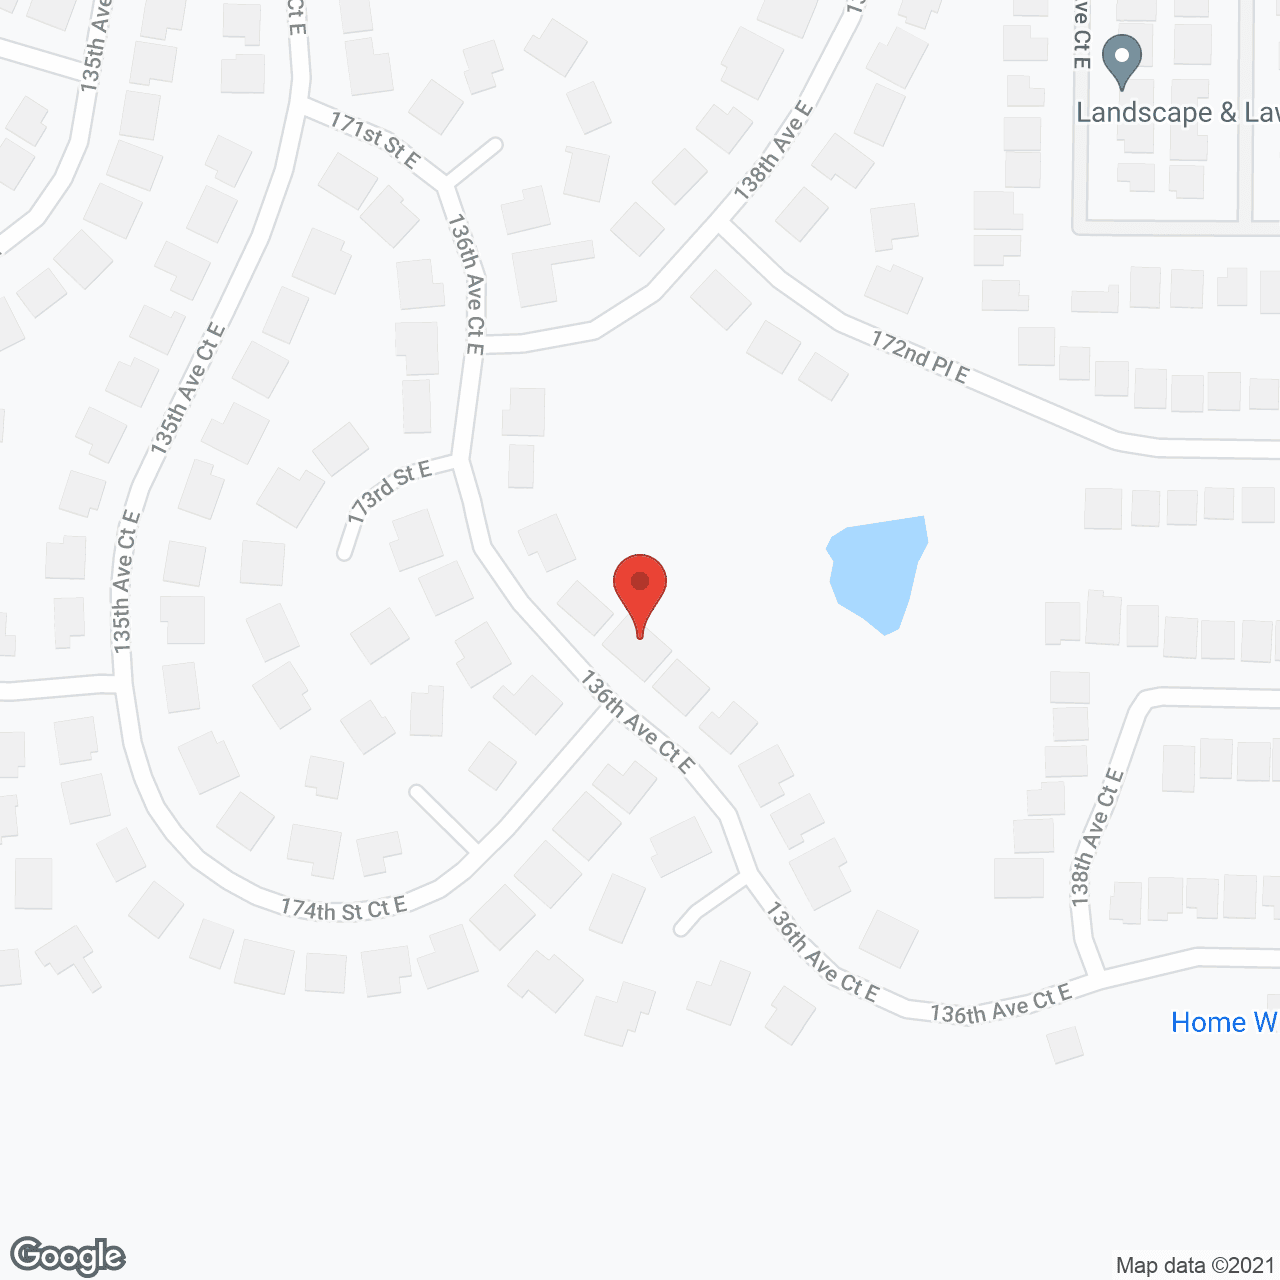 AssureCare Adult Home in google map